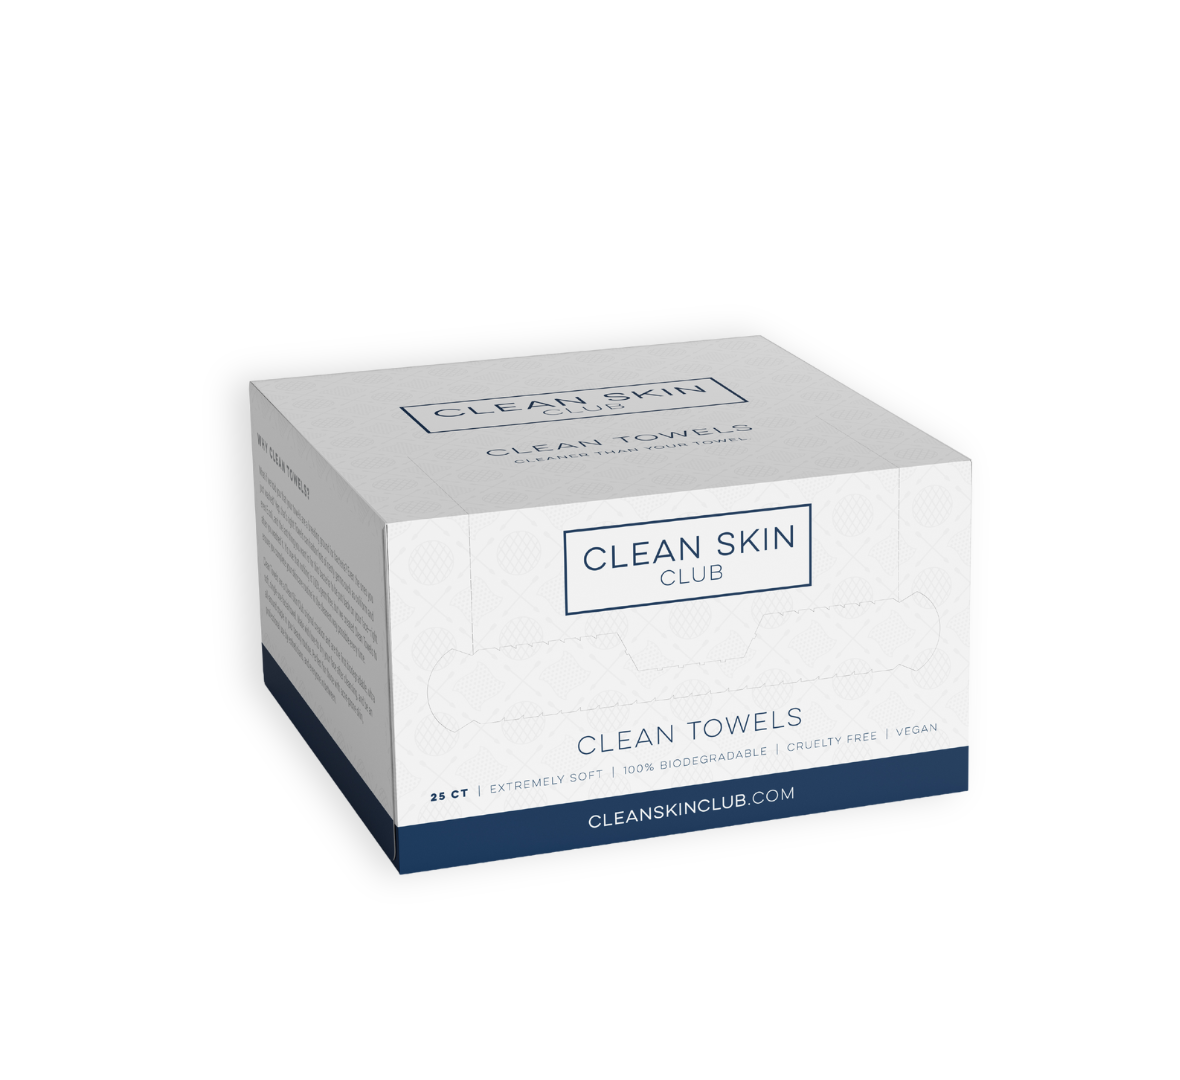 Clean Skin Club Wholesale